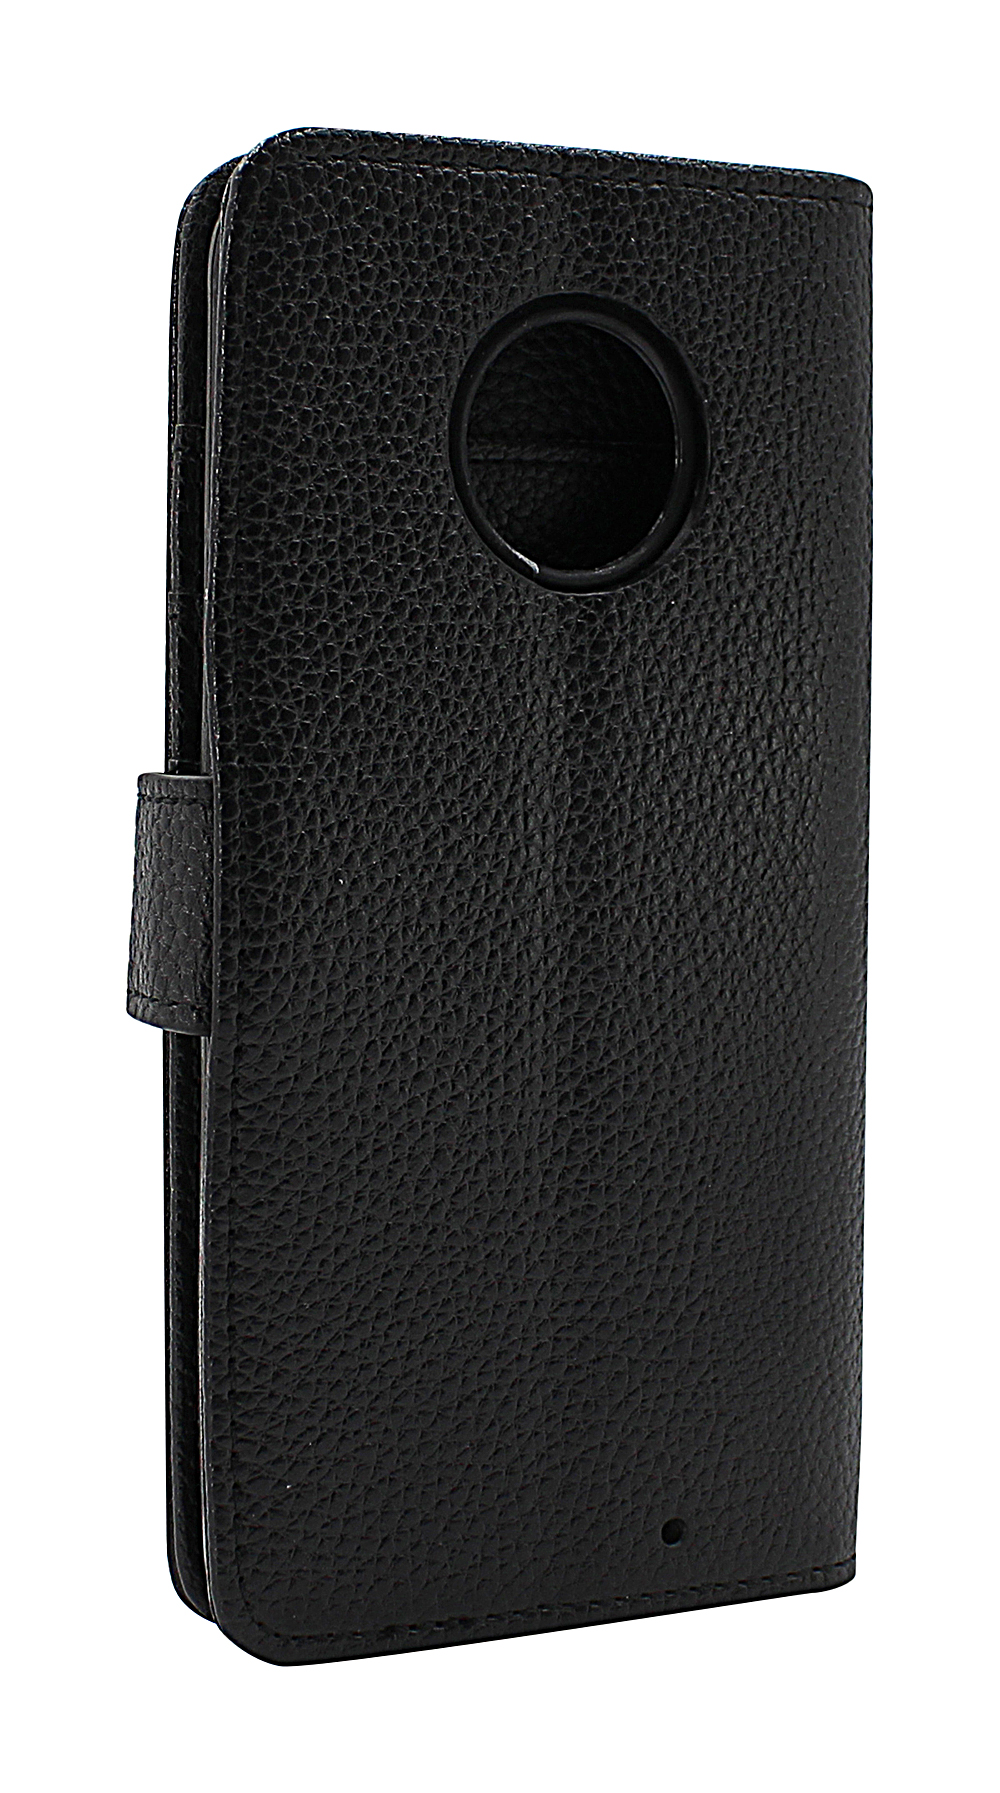 billigamobilskydd.seNew Standcase Wallet Motorola Moto X4 / Moto X (4th gen)